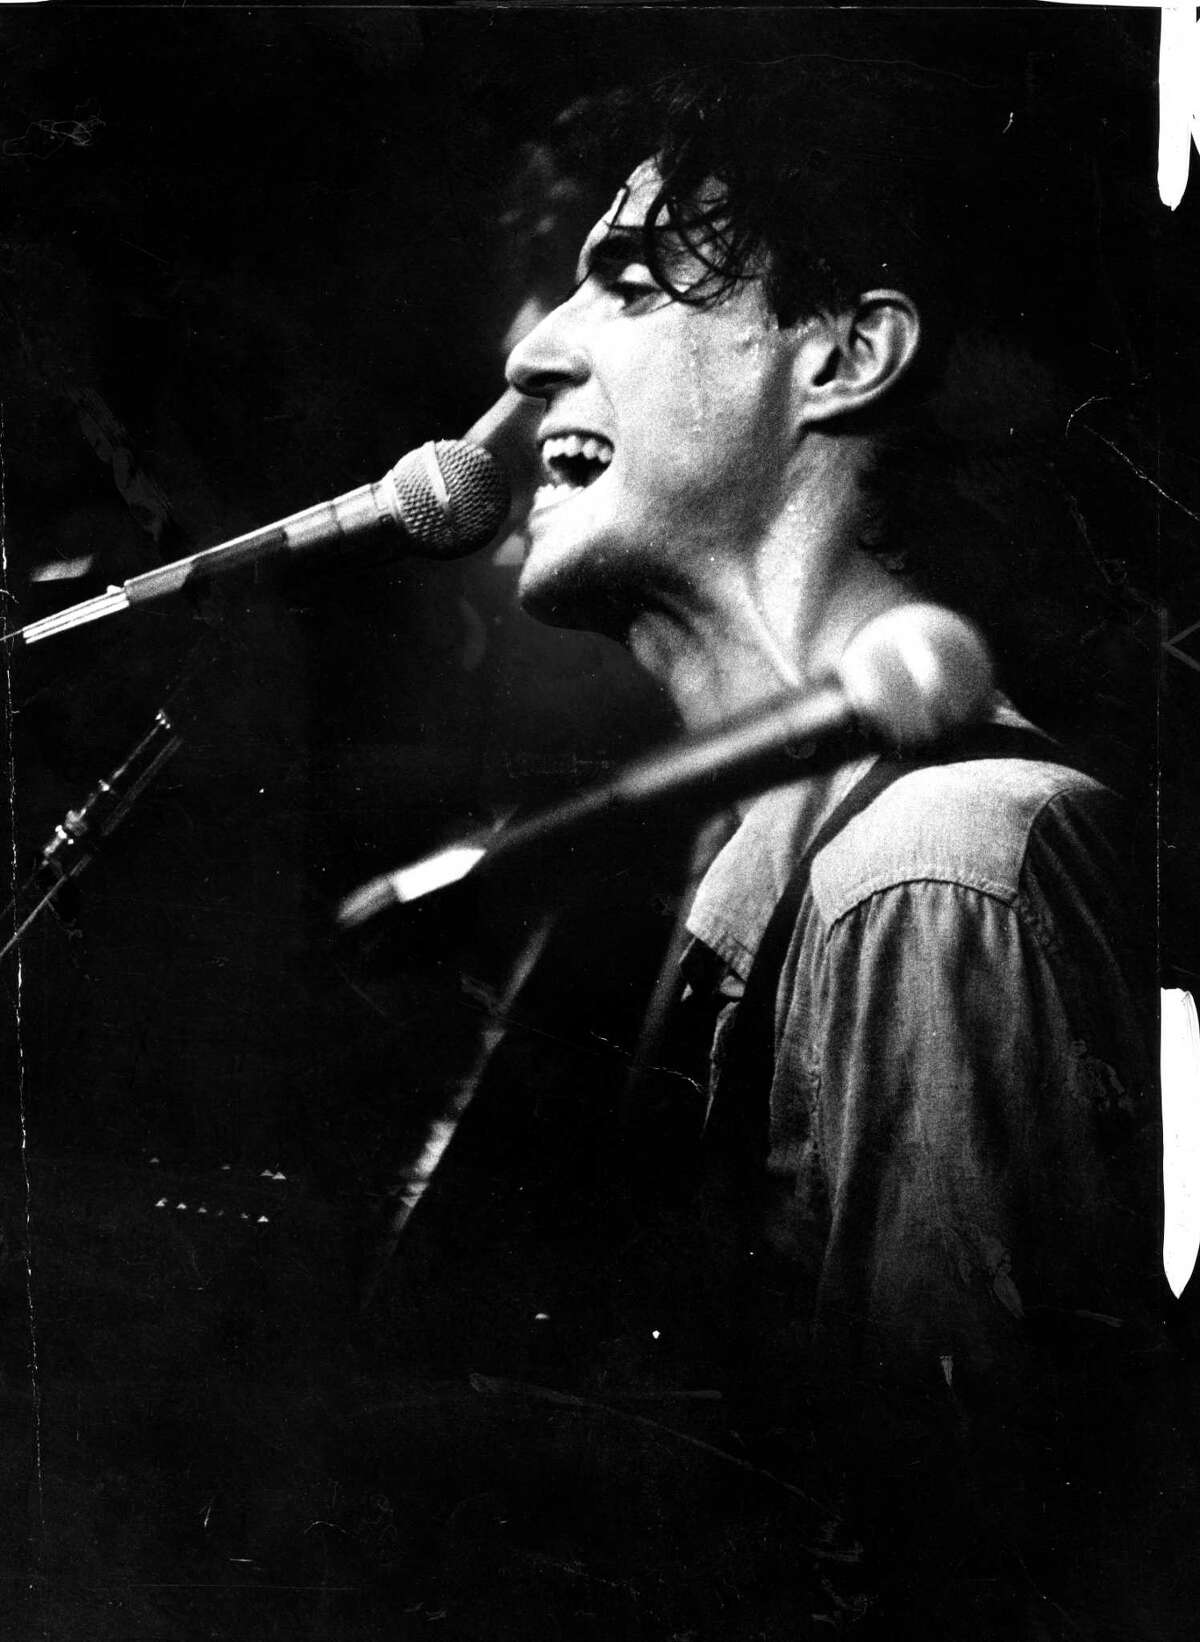 Singer David Bryne of the Talking Heads, Sept.28, 1979.